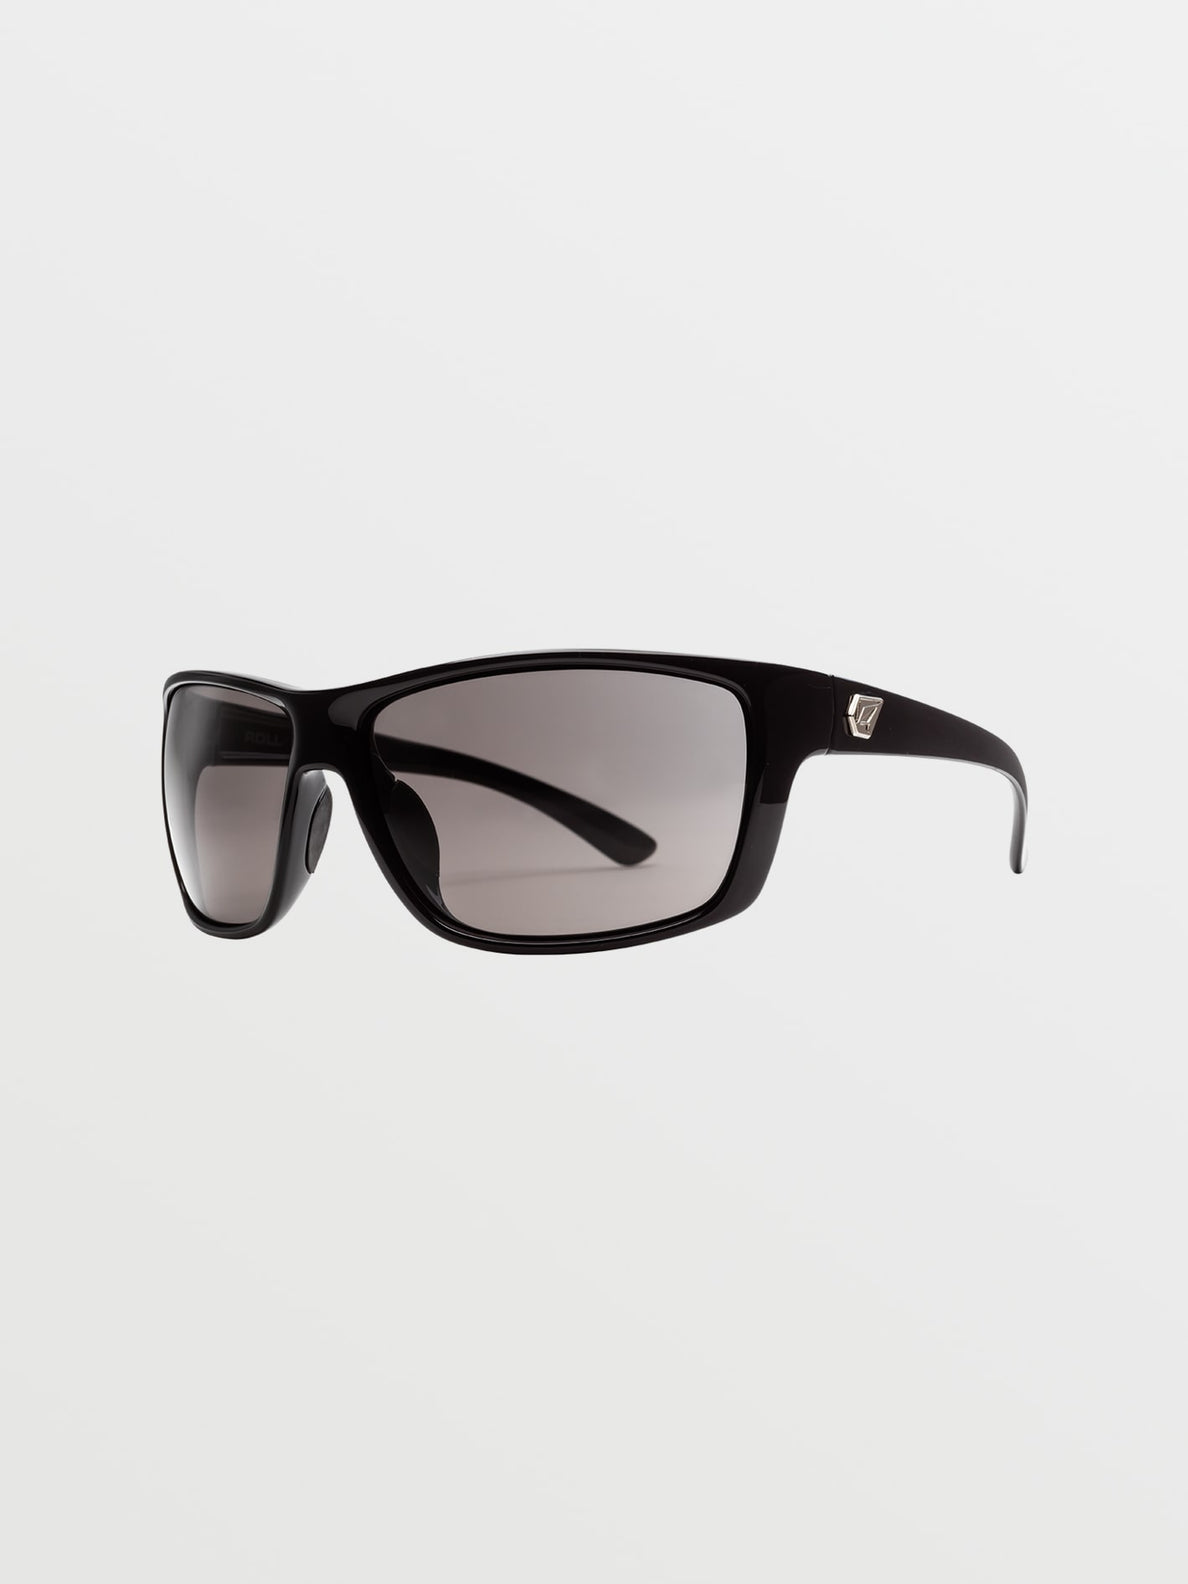 Roll Sunglasses - Gloss Black/Gray (VE01500201_0000) [3]